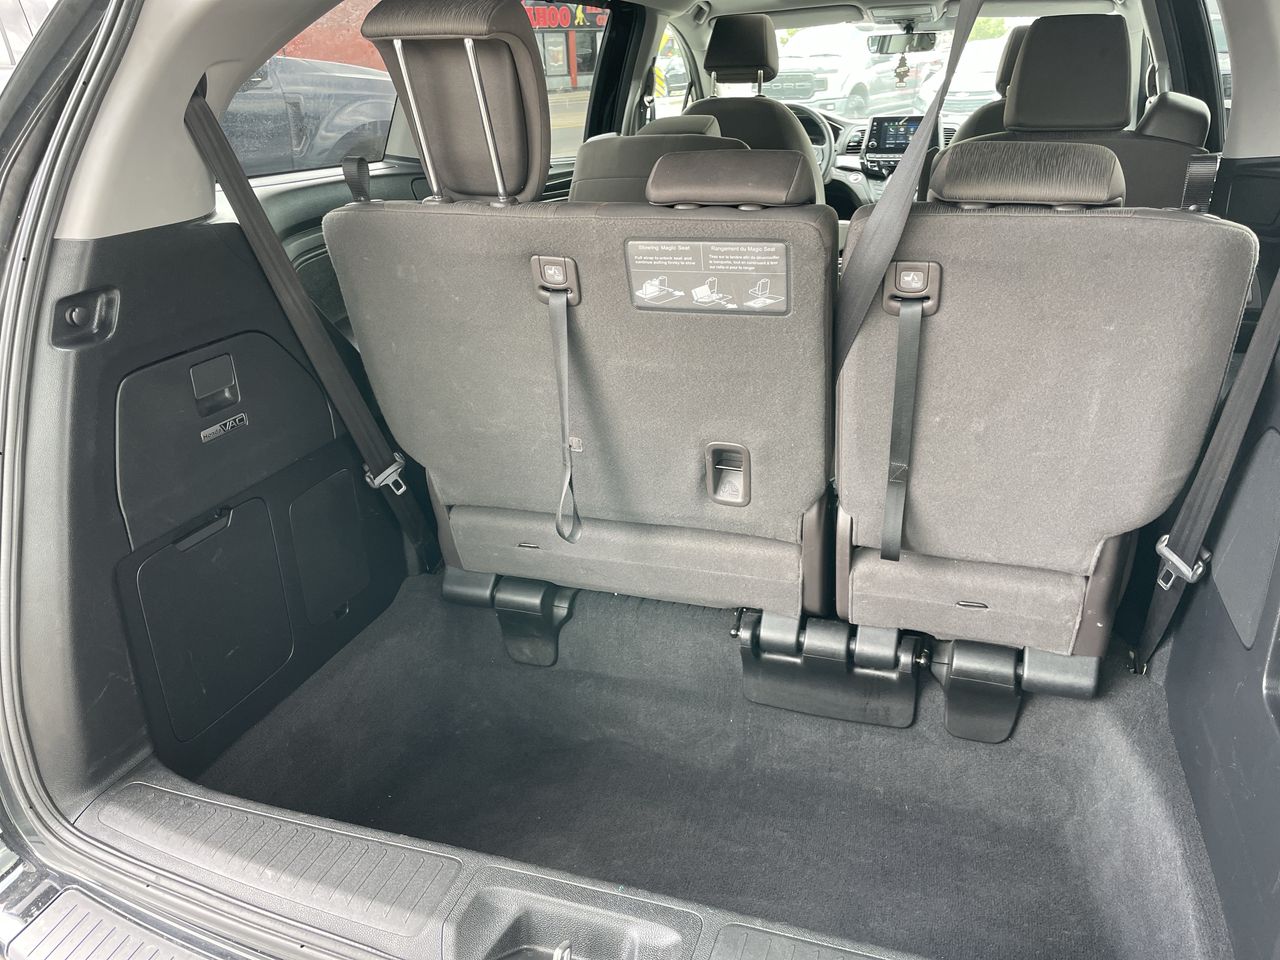 2019 Honda Odyssey - P21095 Full Image 23